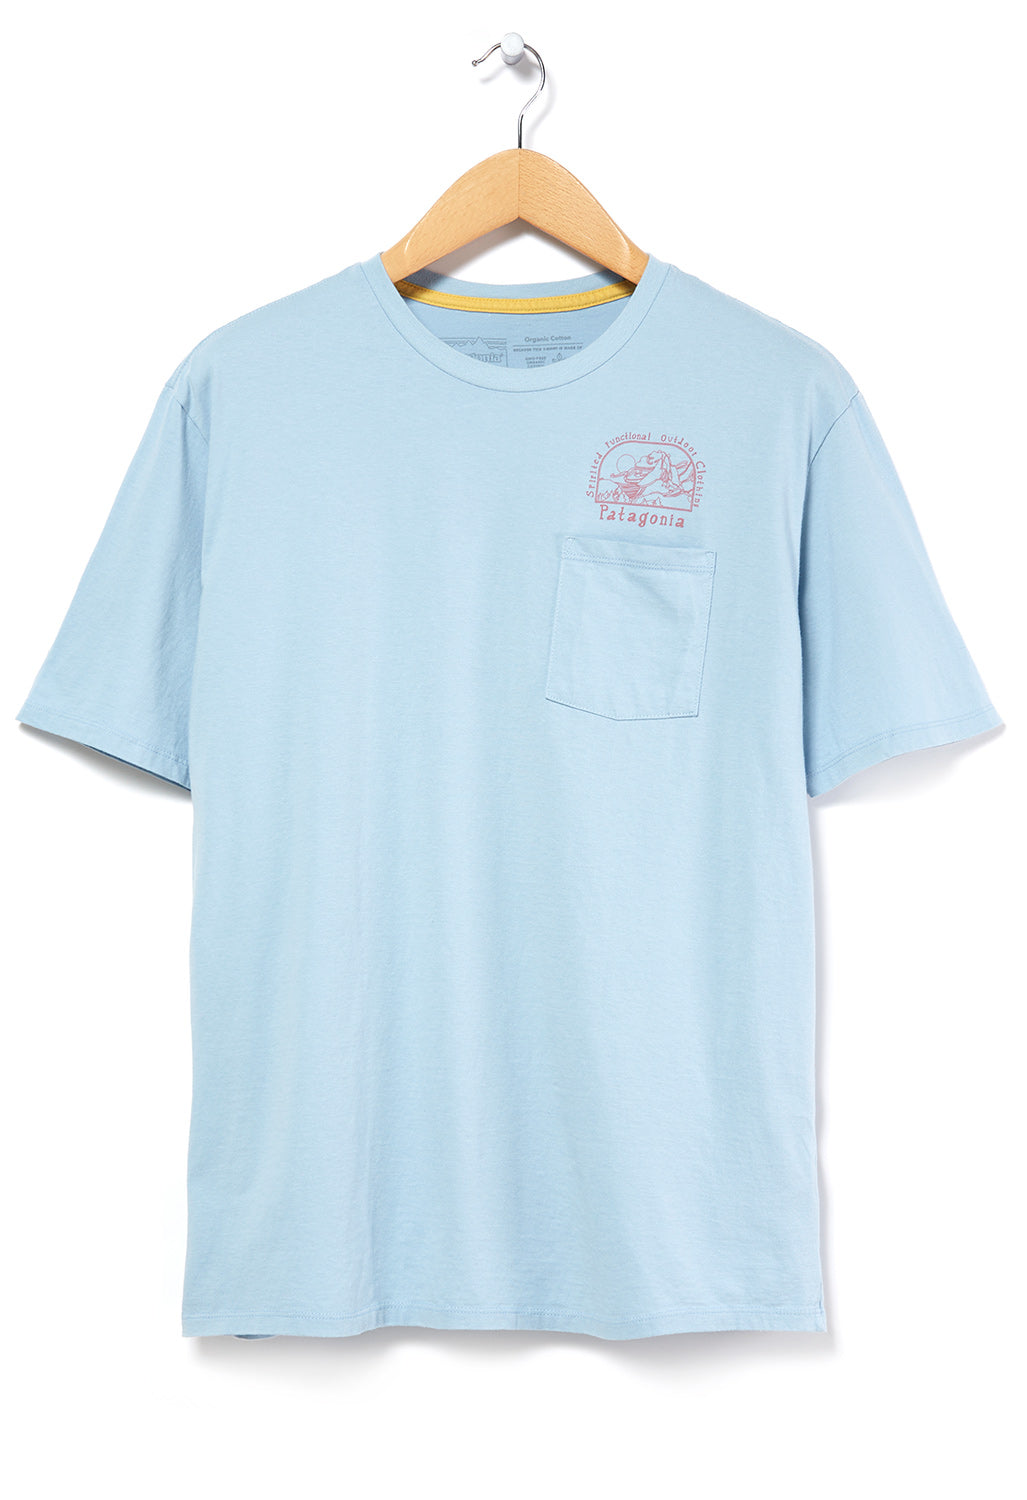 Patagonia Men's Lost & Found Organic Pocket T-Shirt - Steam Blue